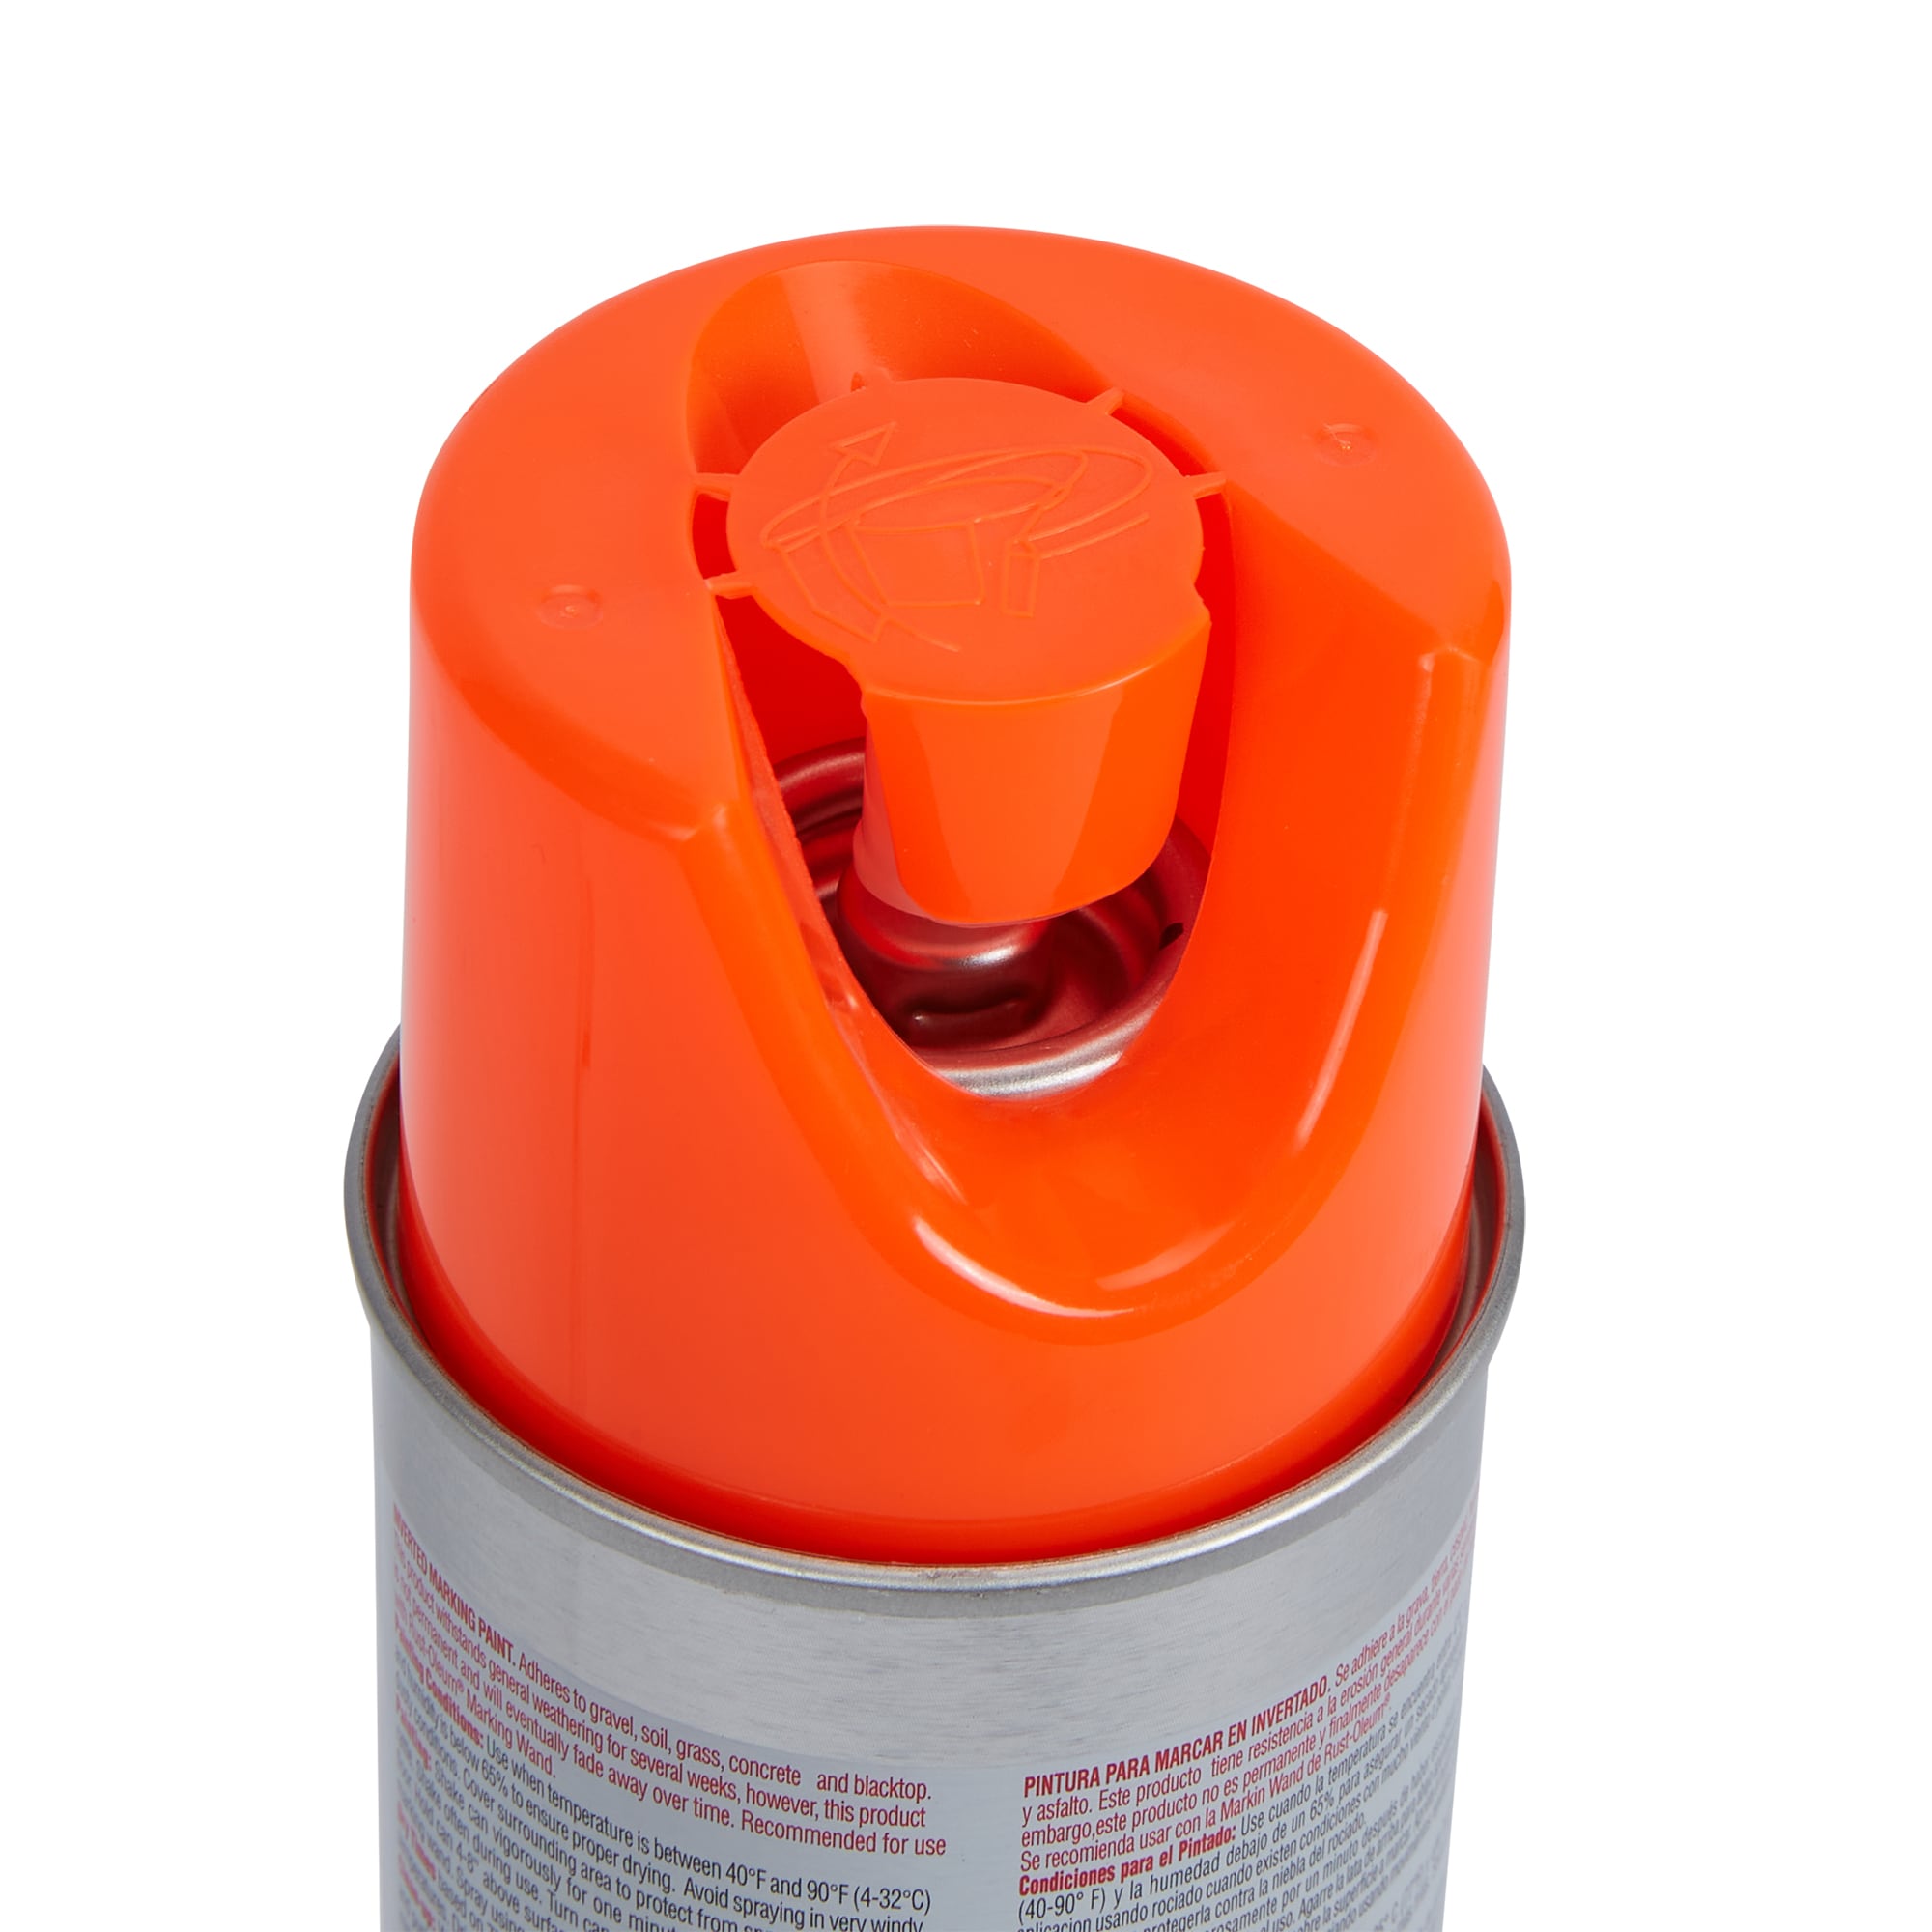 General Paint INVMRK-11 17 Ounce Fluorescent Orange Red Marking Paint:  Marking Spray Paints (042909115812-2)